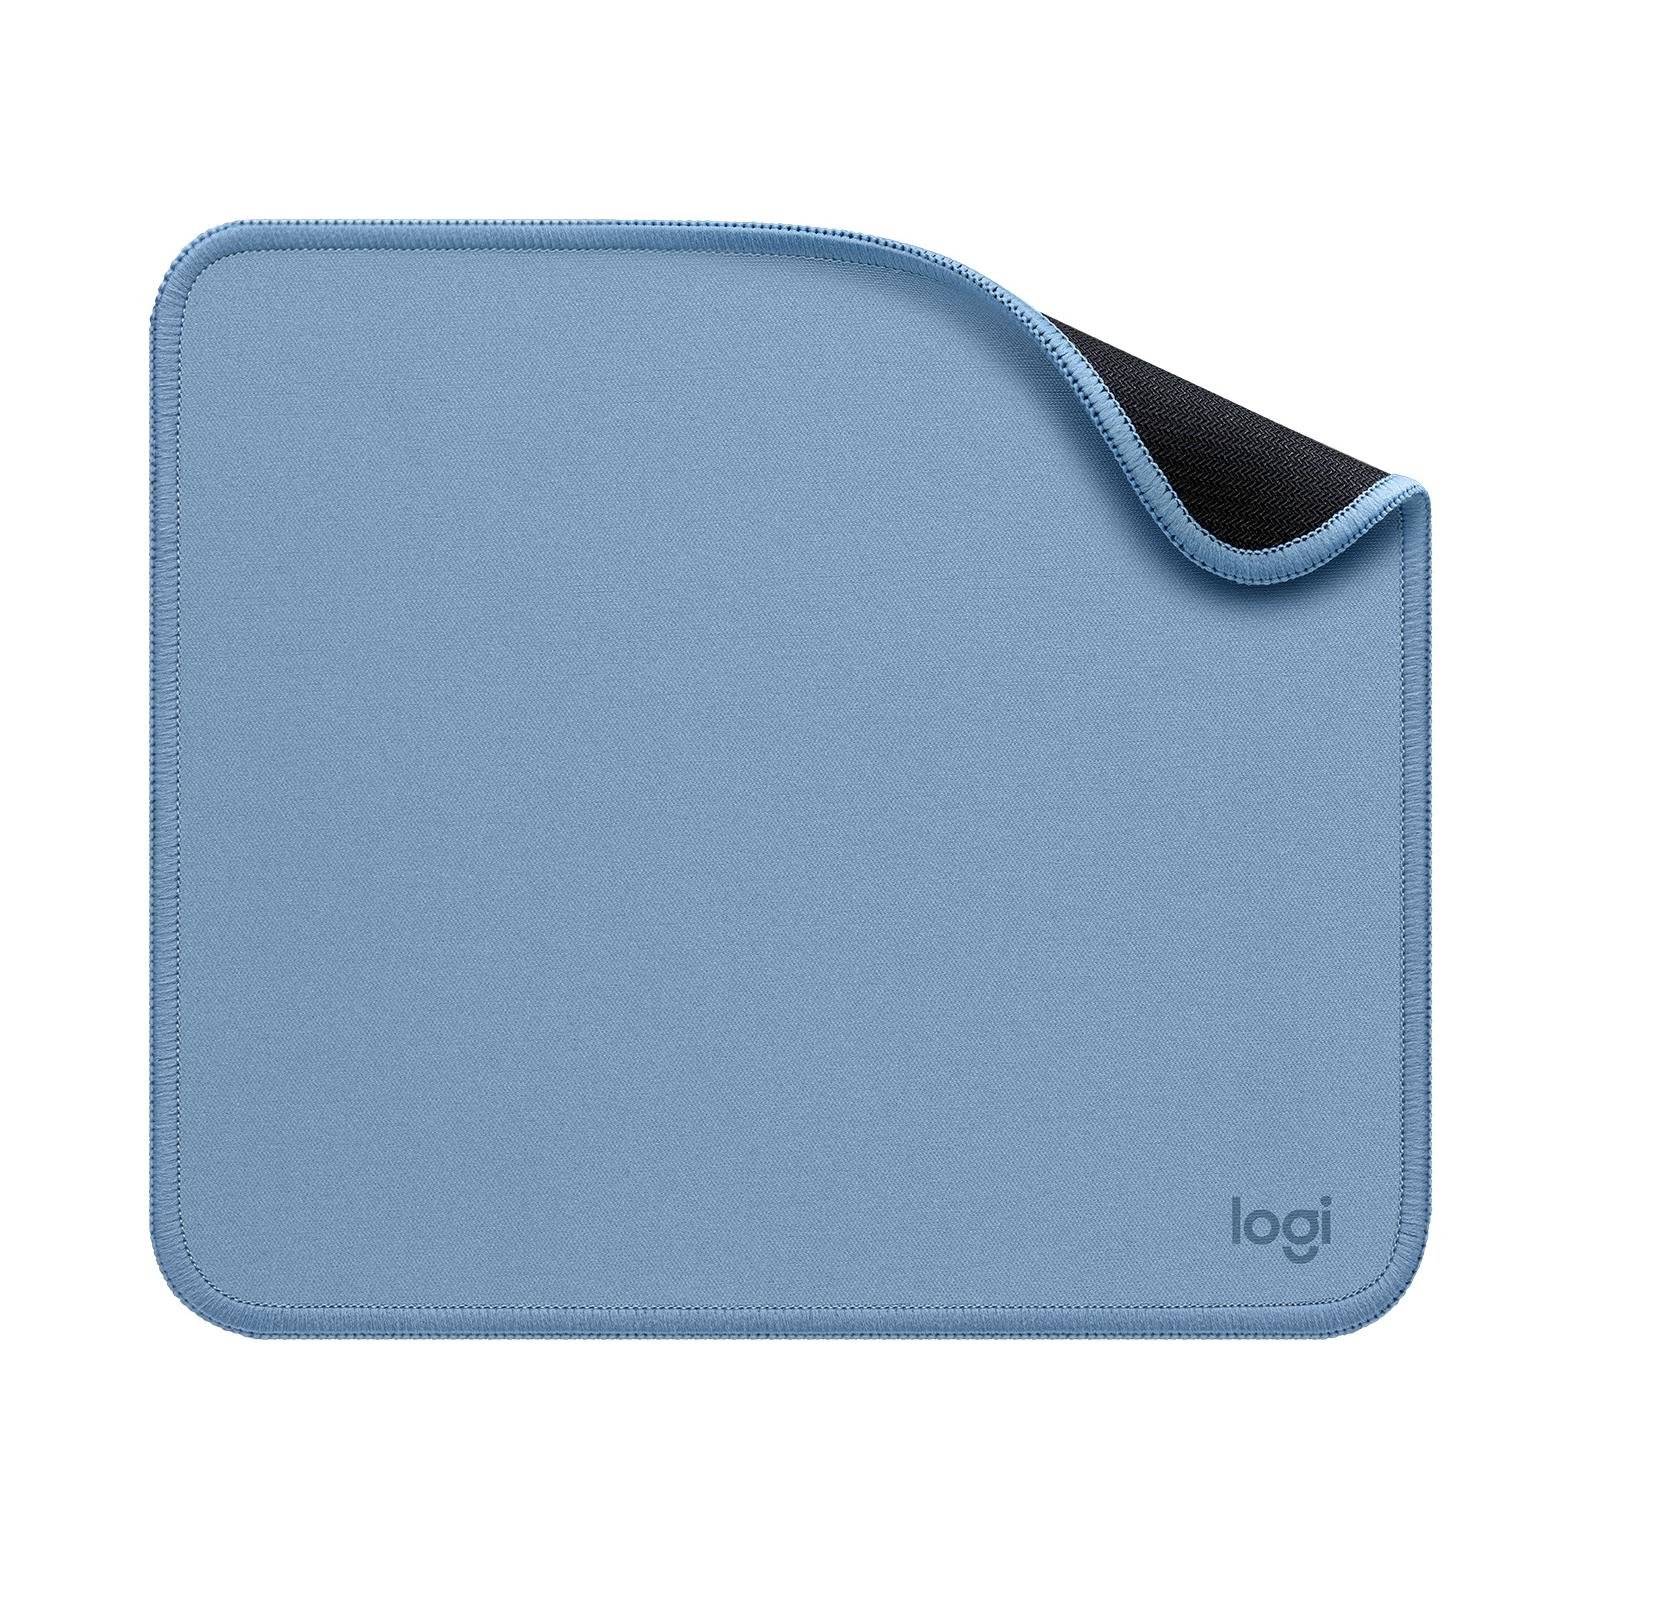 Logitech Mouse pad MPADBL / 956-000051 Blue